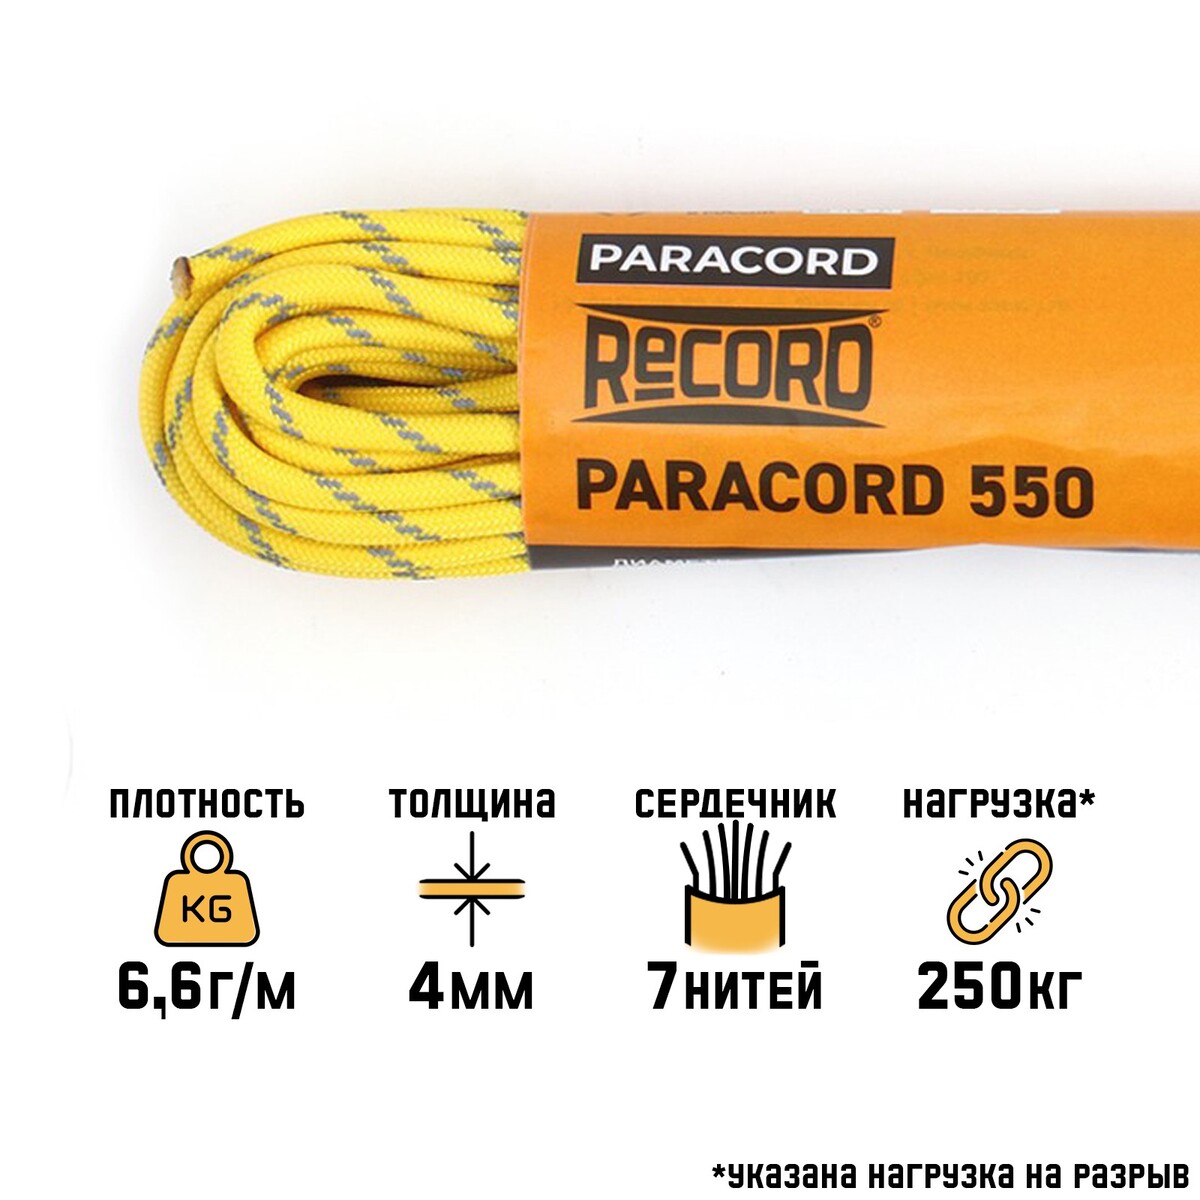 Паракорд 550 светоотражающий, нейлон, желтый, d - 4 мм, 10 м паракорд 550 нейлон неон желтая змея d 4 мм 10 м